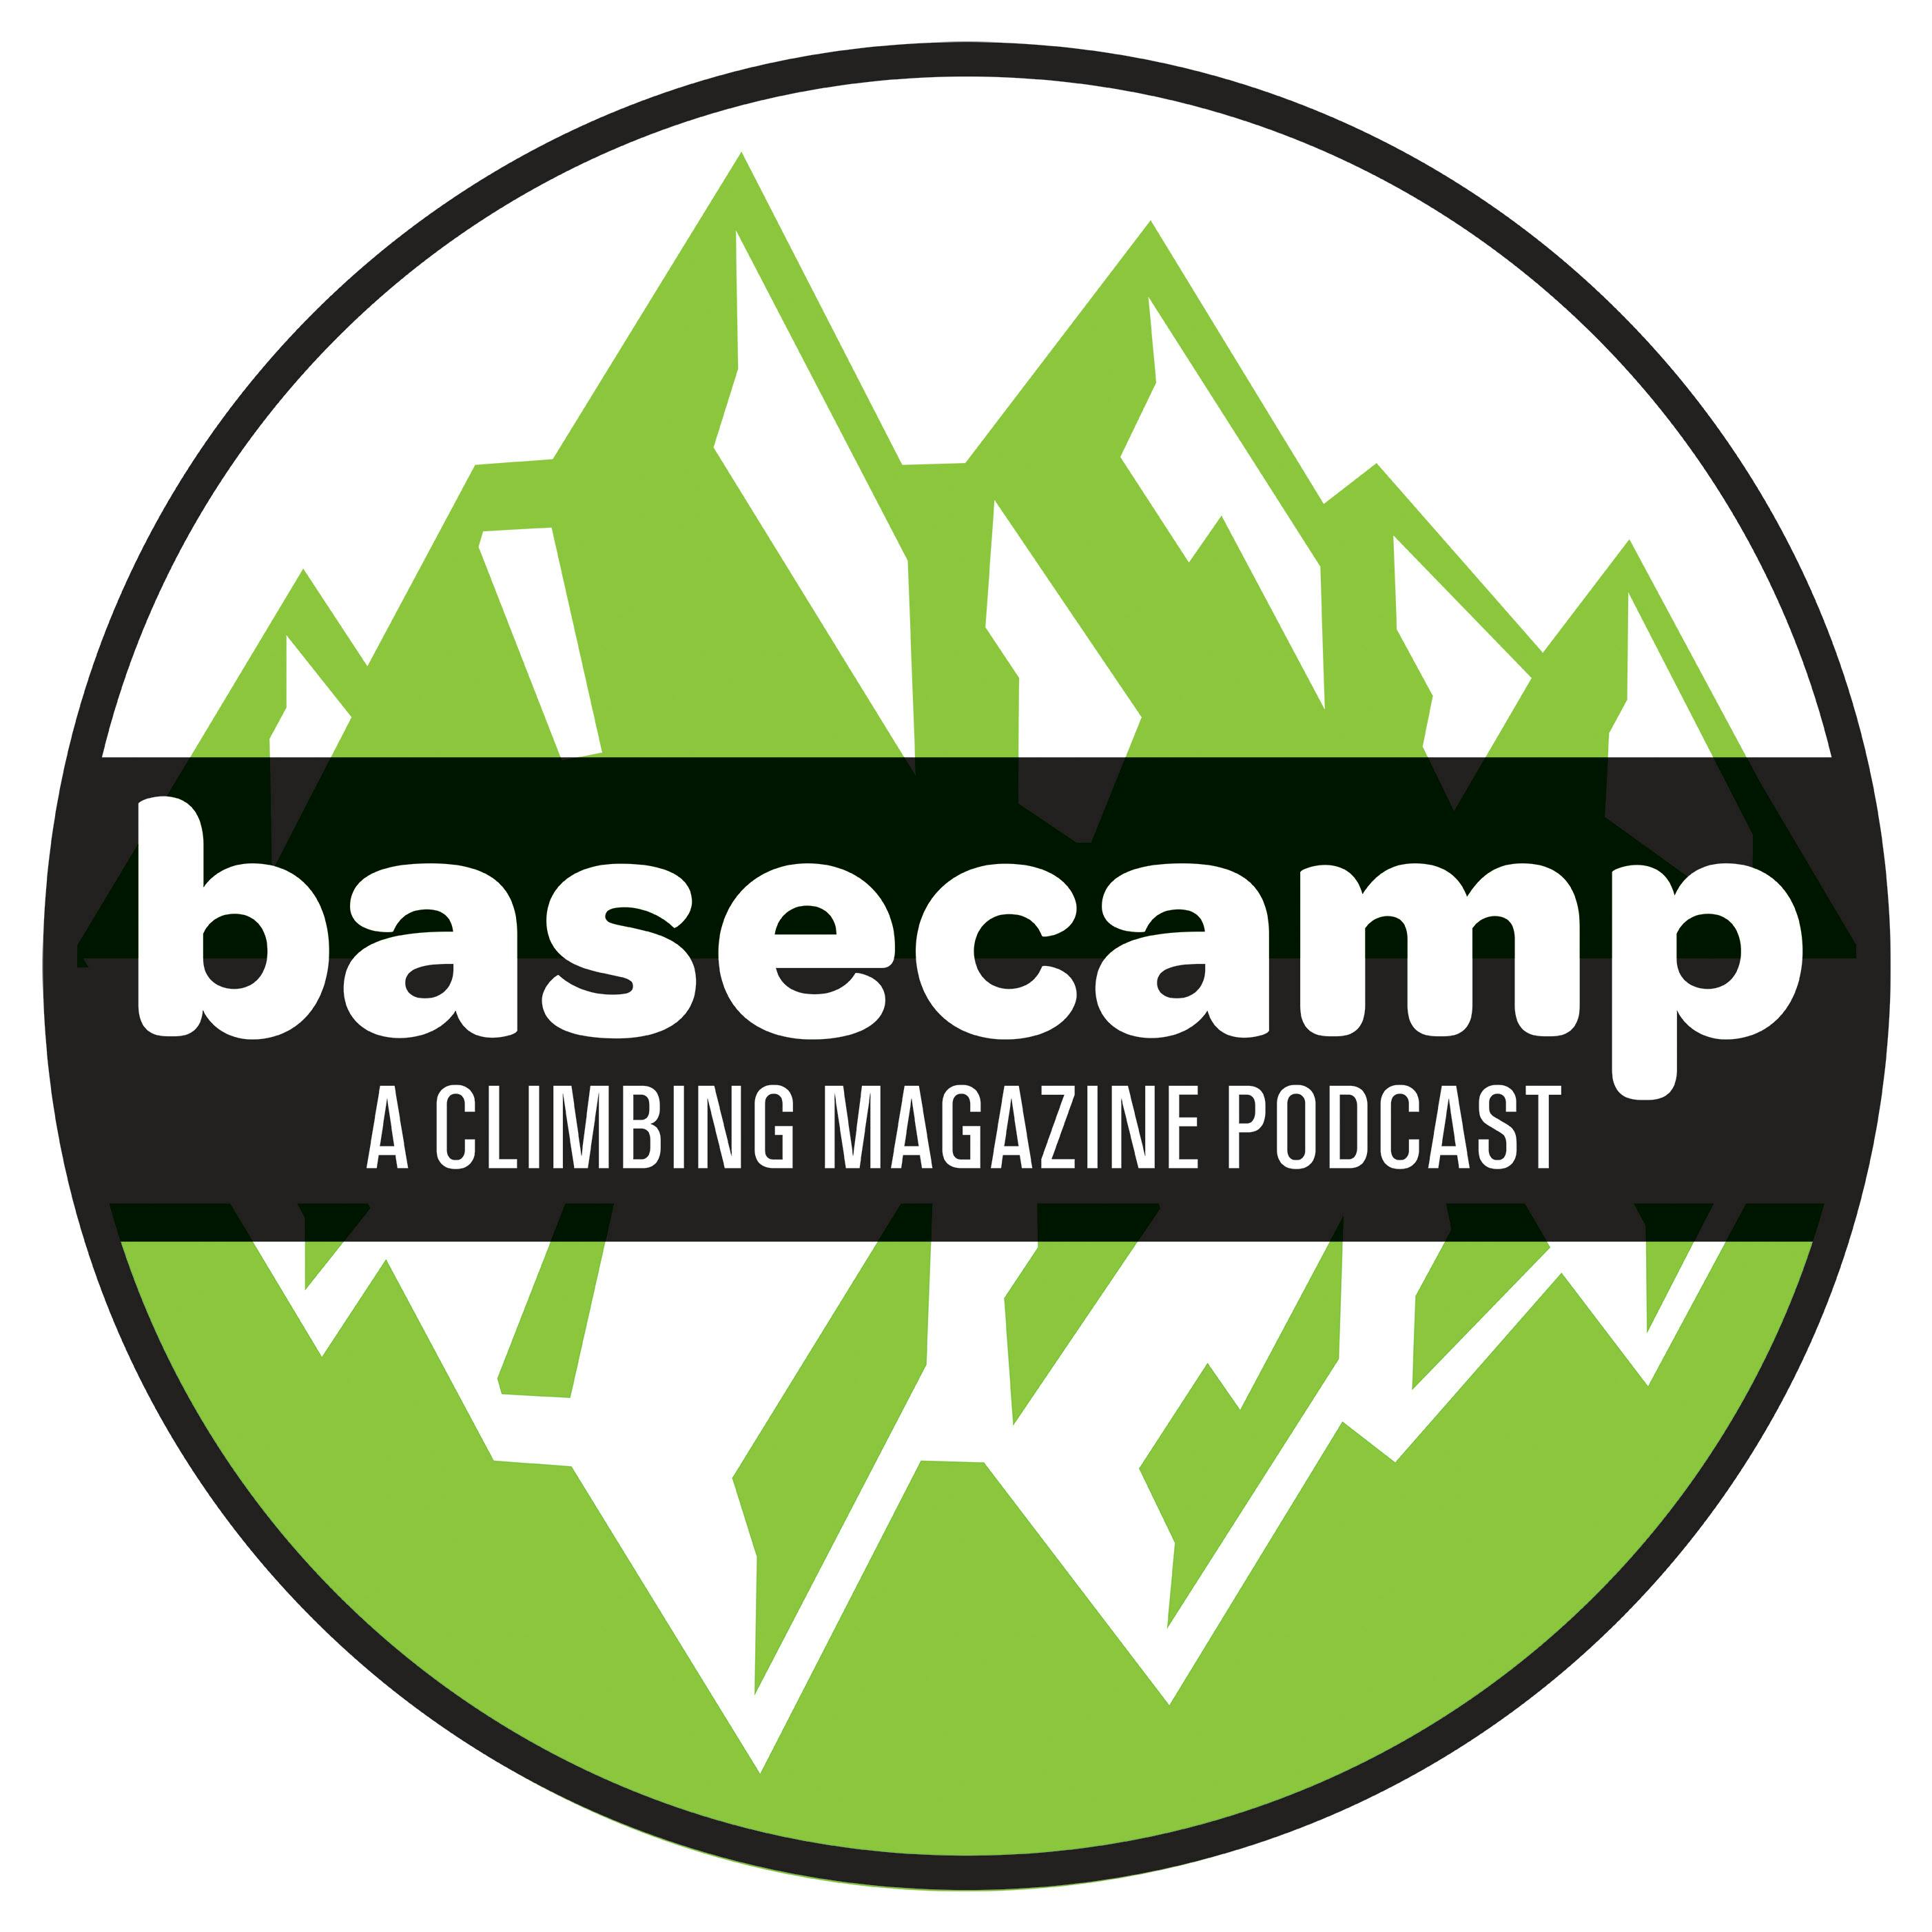 Podcast Updates and Matt Samet Chat